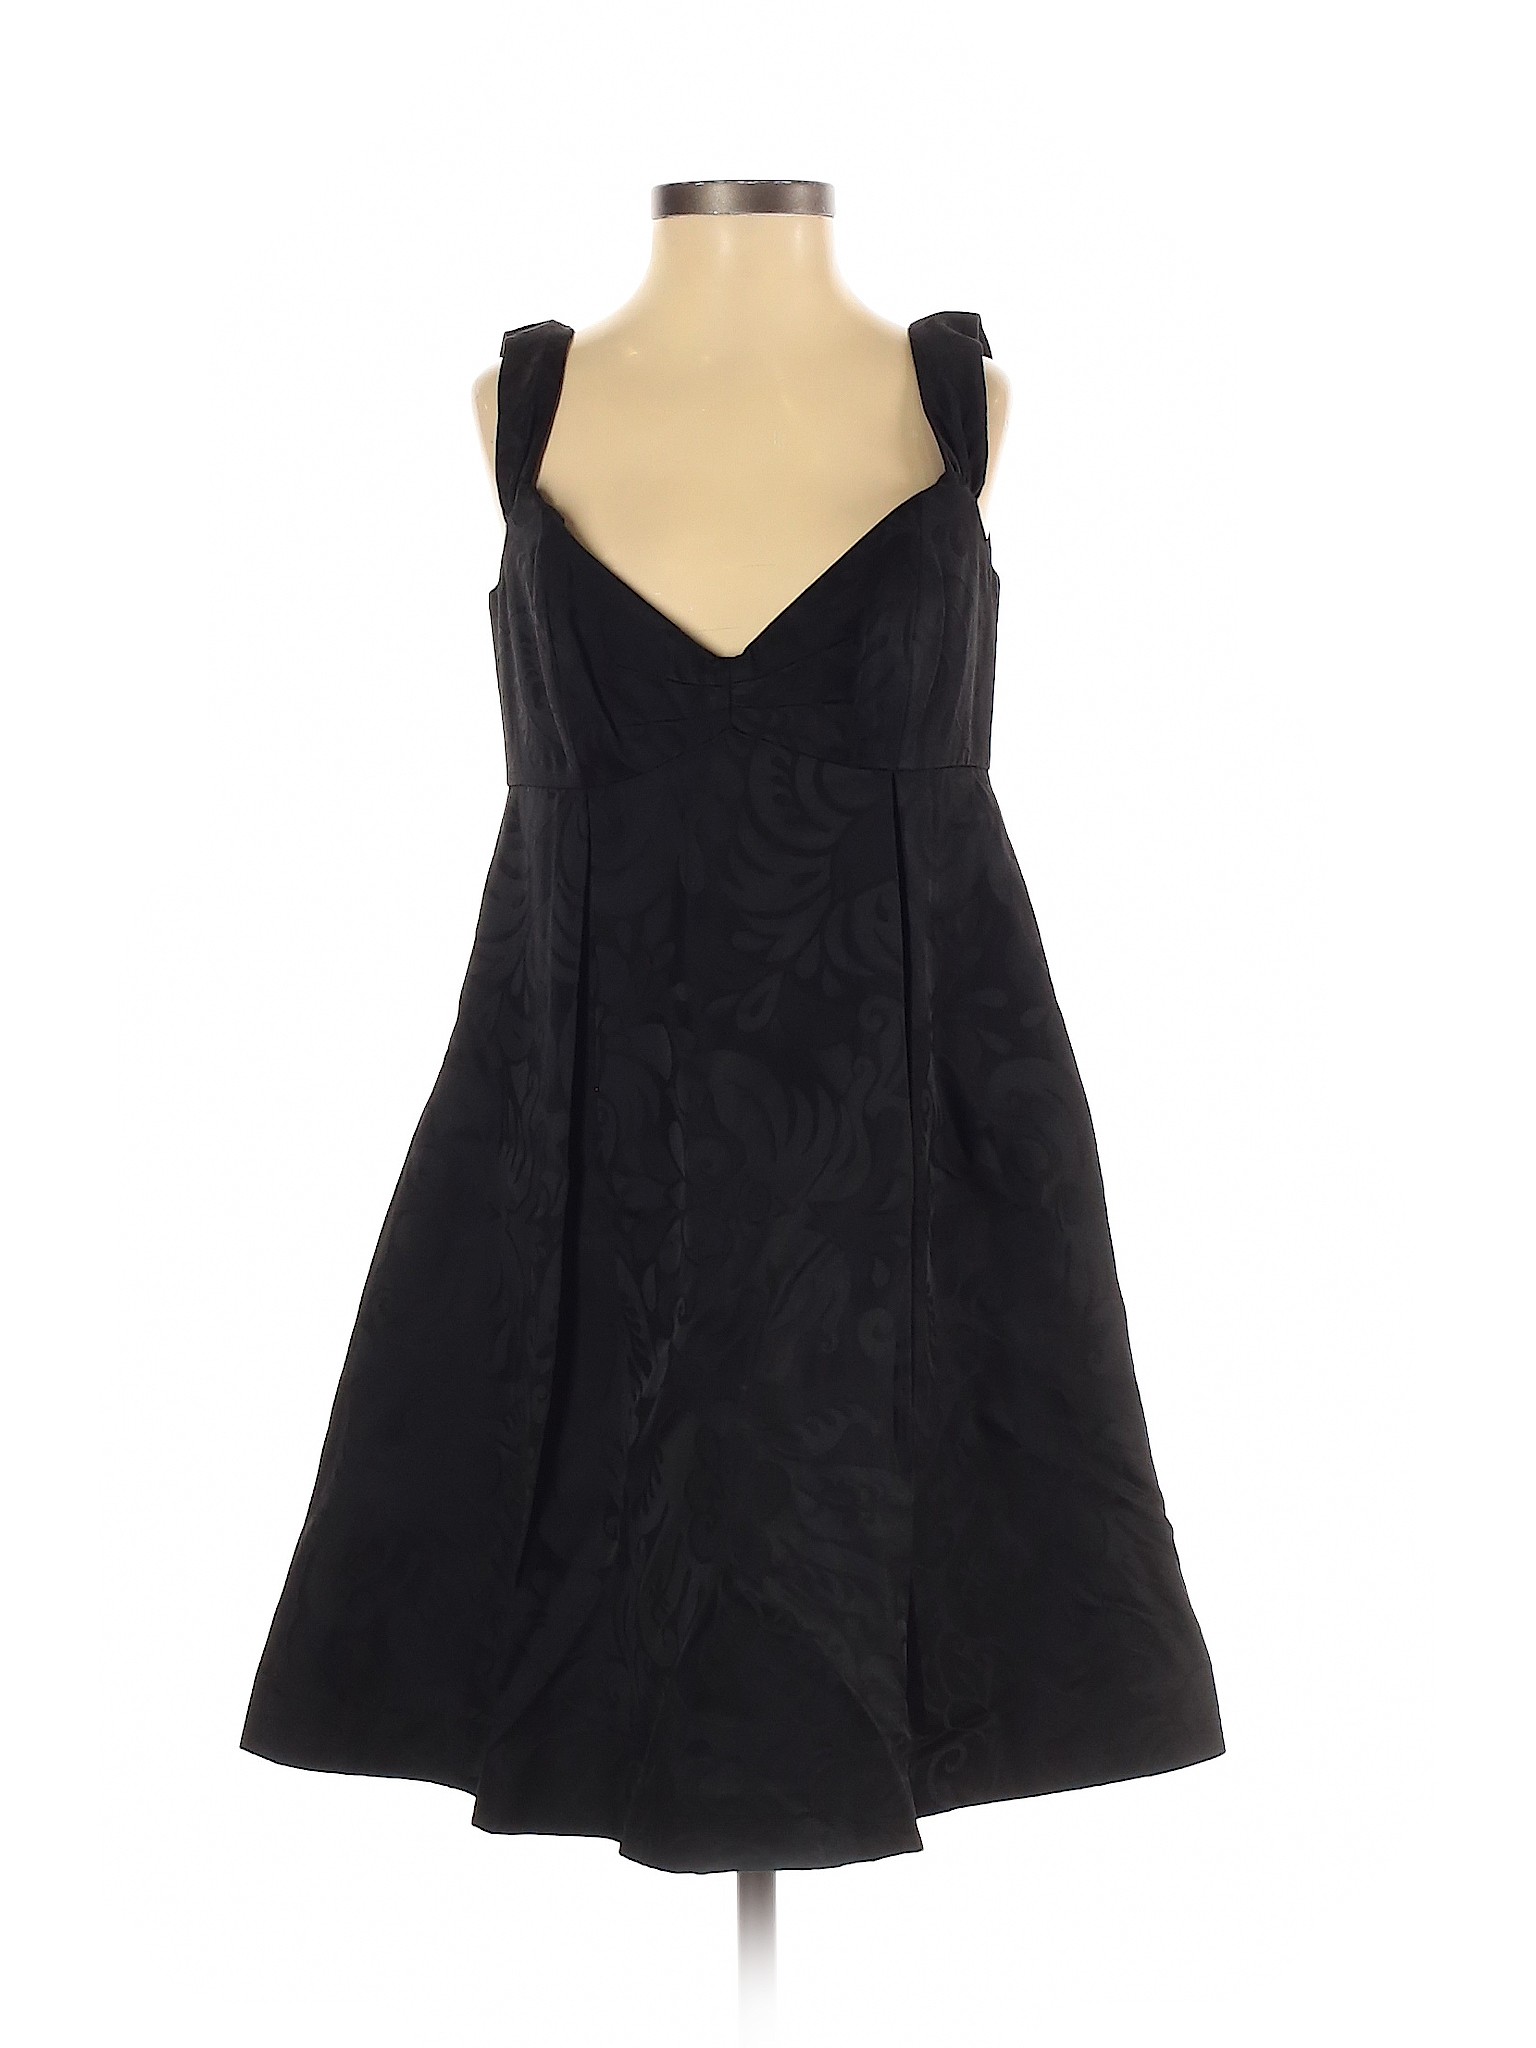 Milly Women Black Cocktail Dress 2 | eBay